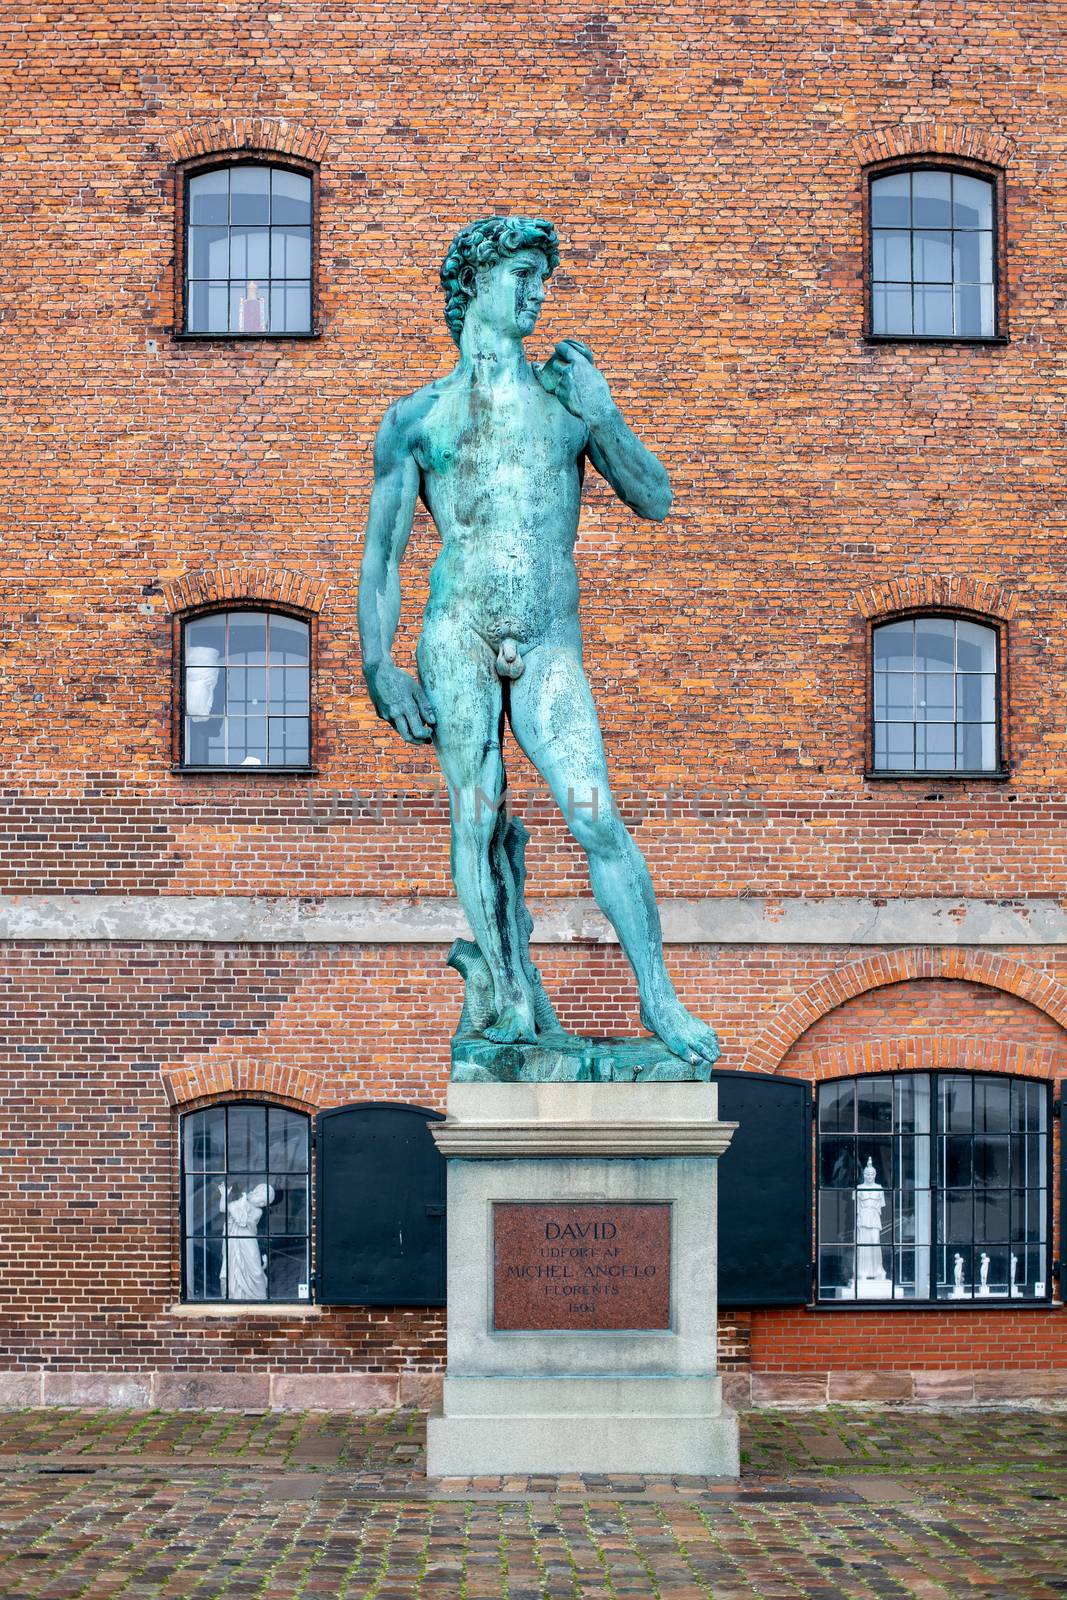 David Statue in Copenhagen, Denmark by oliverfoerstner